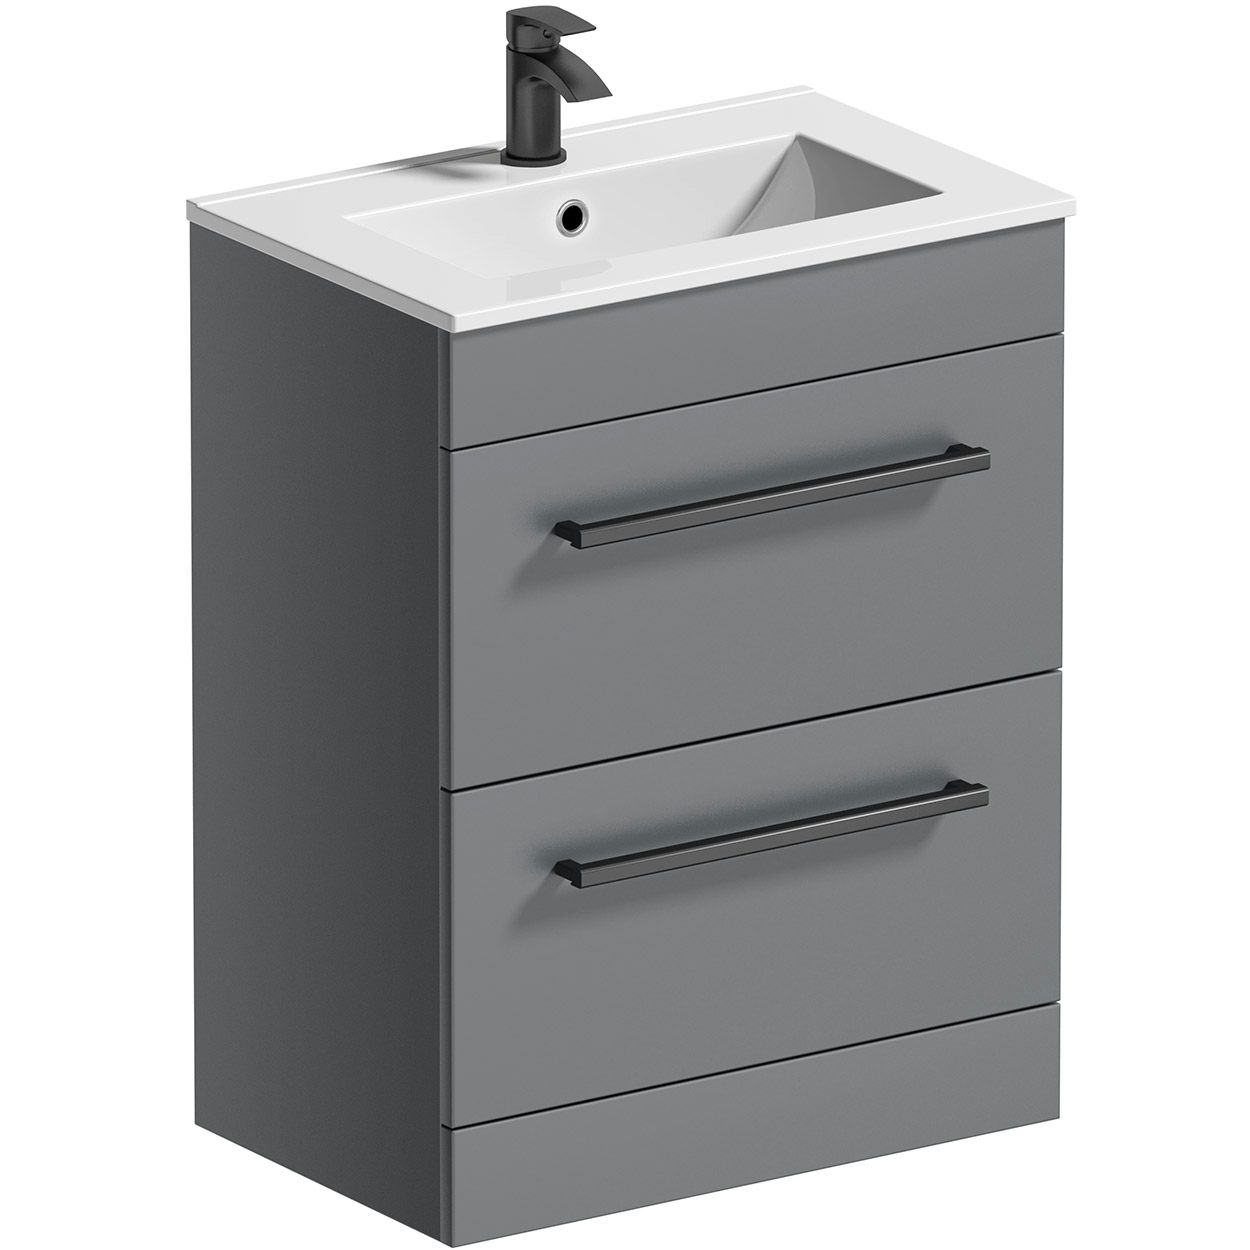 Orchard Derwent stone grey floorstanding vanity drawer unit and ceramic basin 600mm with black handle, tap & waste